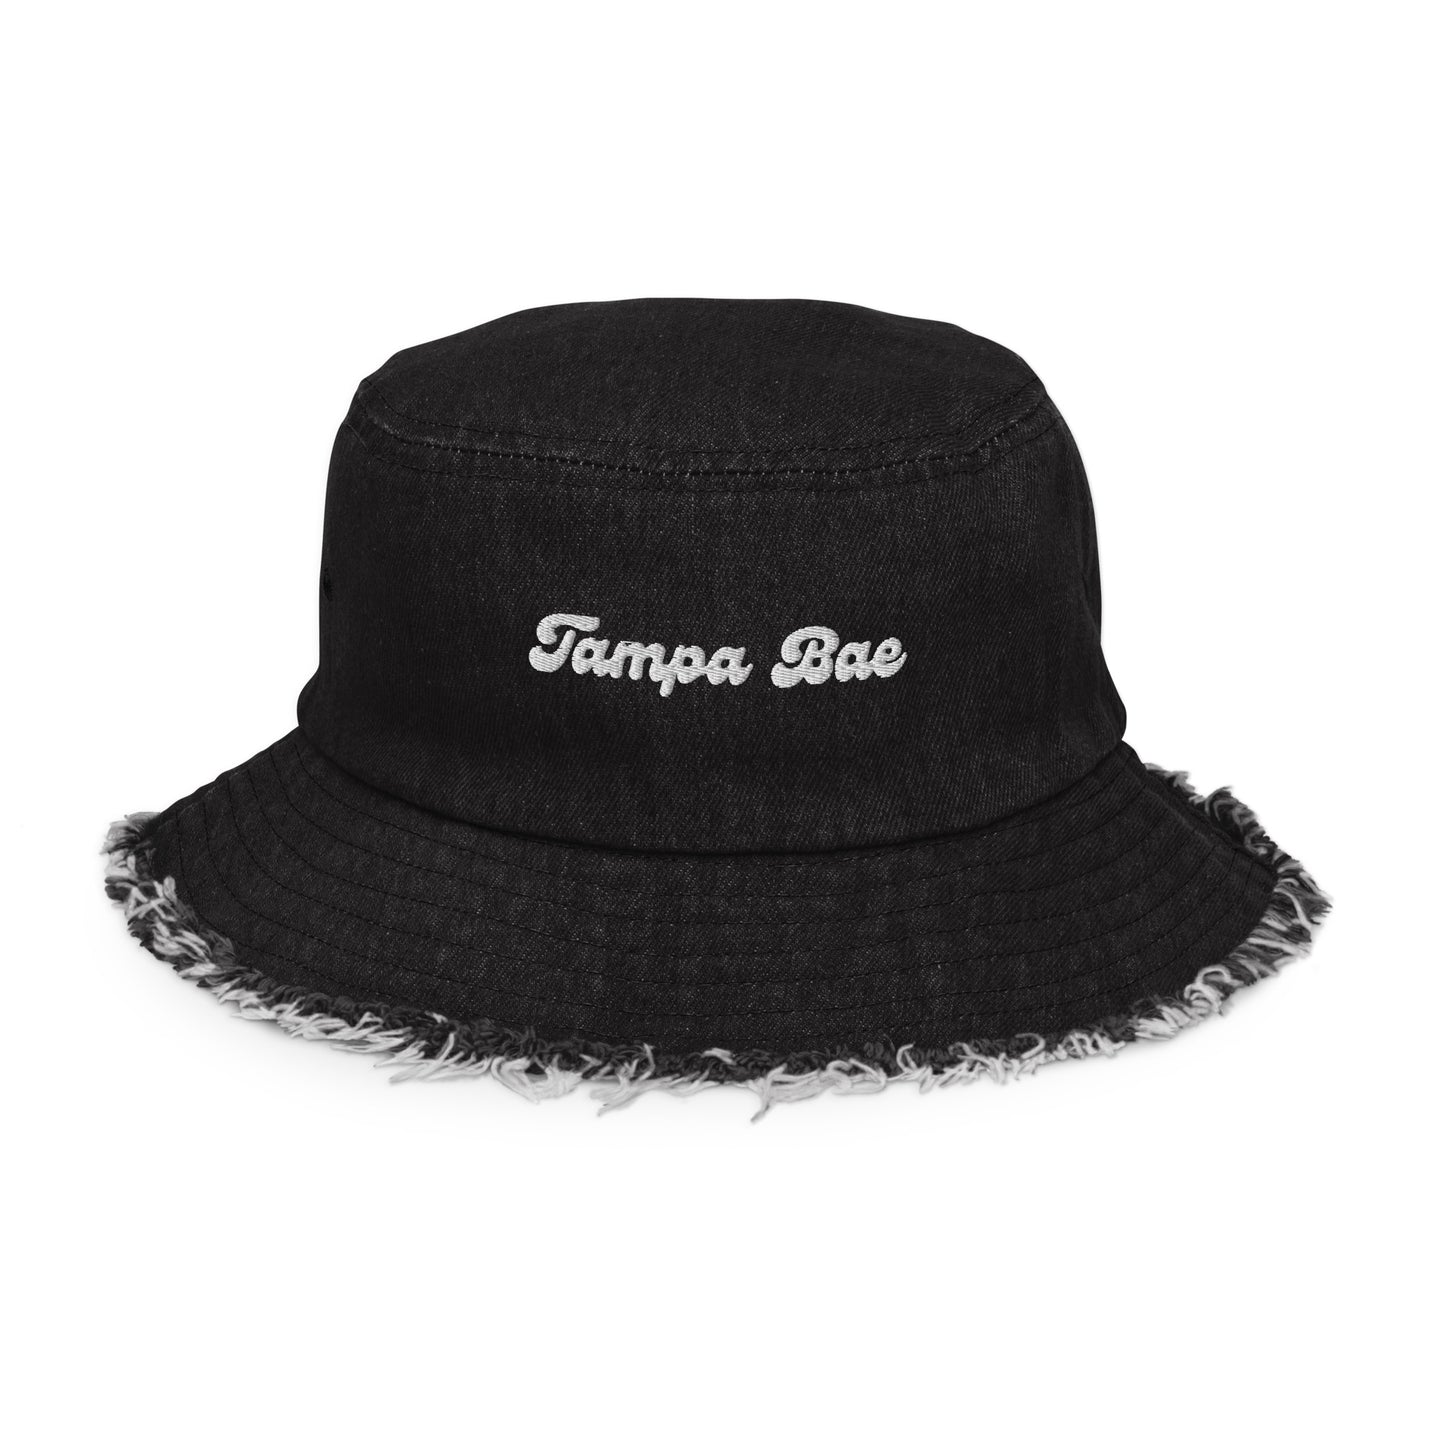 Tampa Bae Distressed Denim Bucket Hat - Black